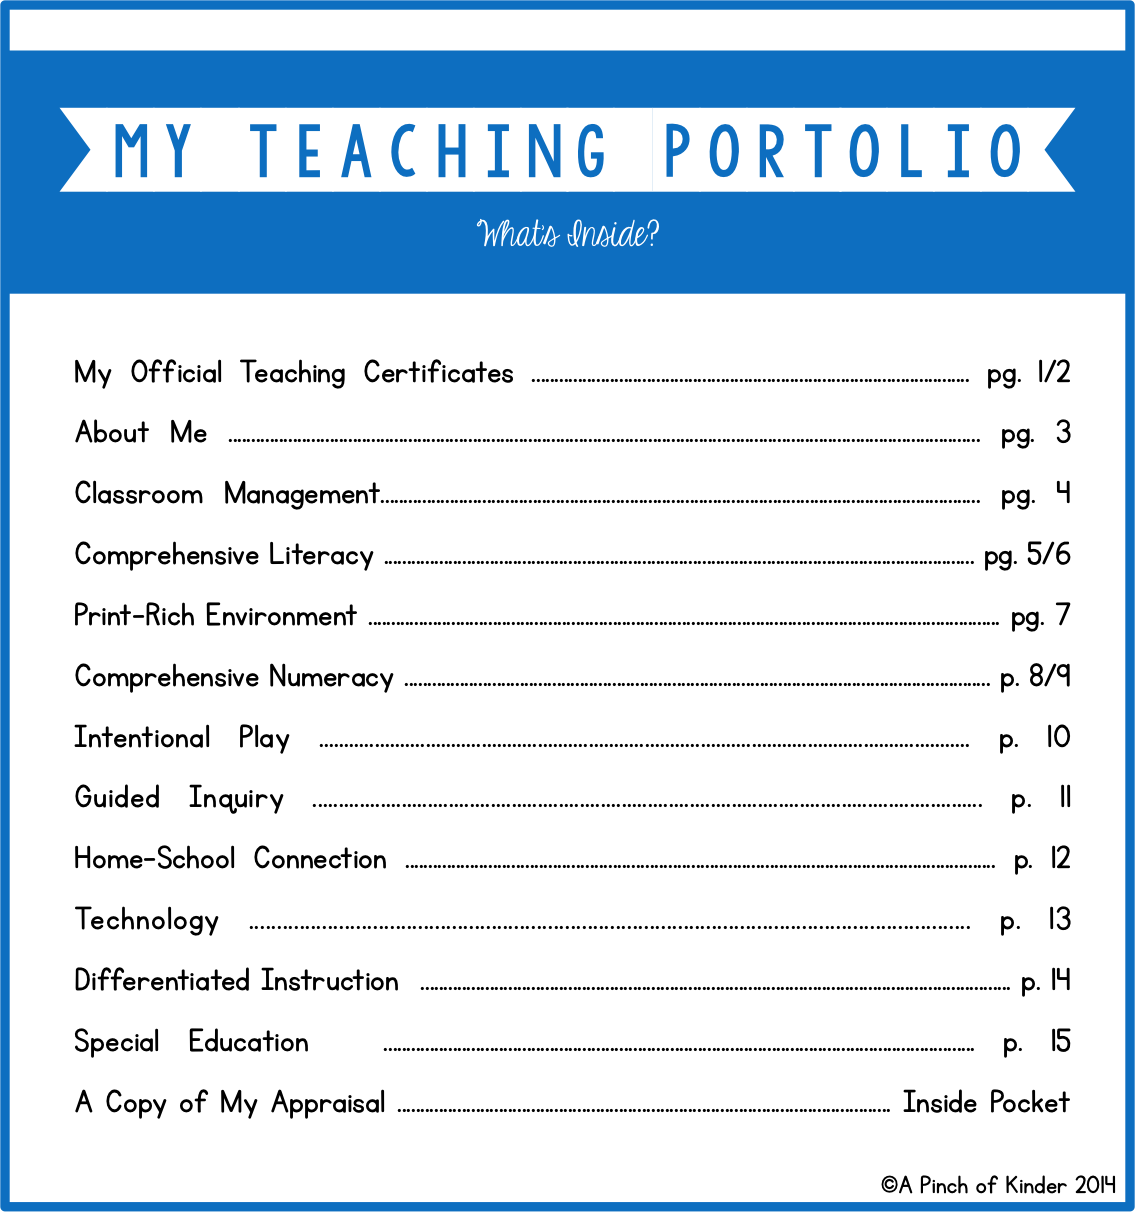 Teaching portfolio cover letter examples